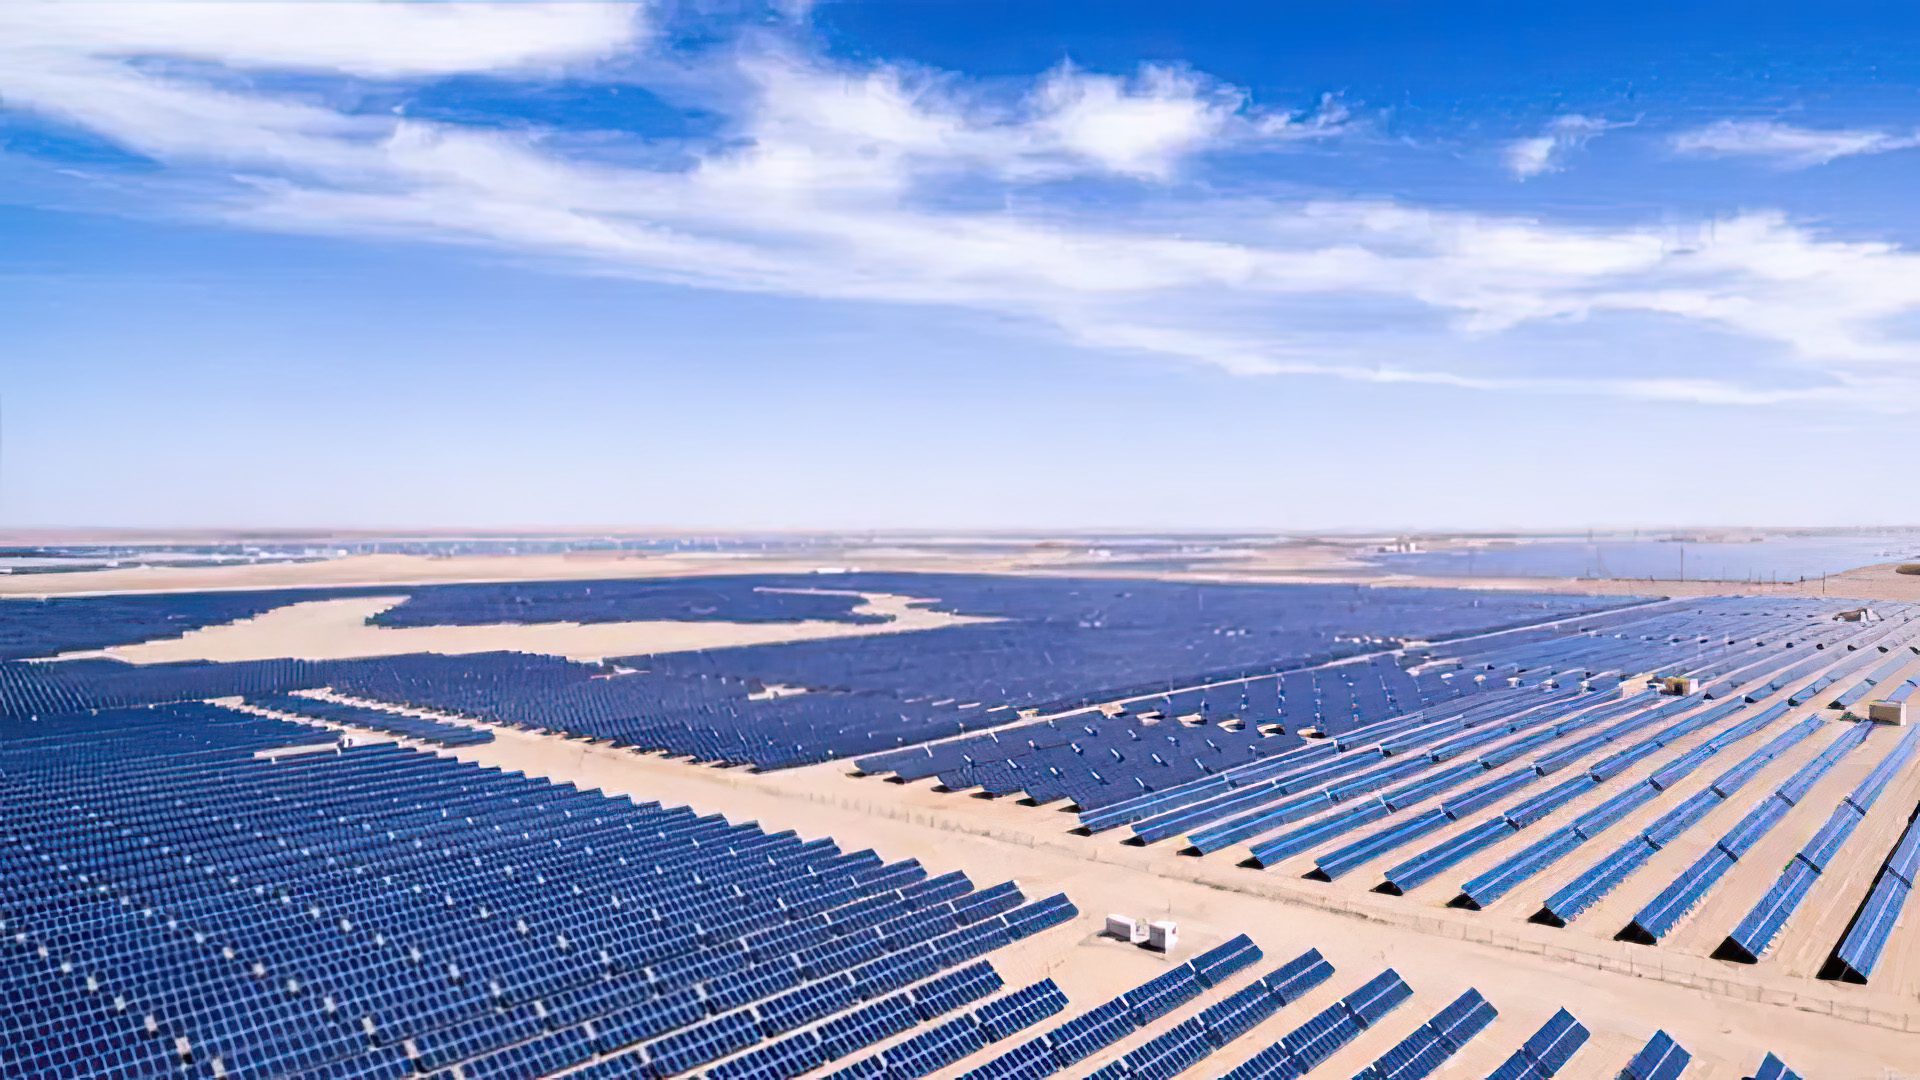 Location: Benban, Egypt; Peak power: 1650 MW; Largest solar park in Egypt (Photo: afrik21.africa).